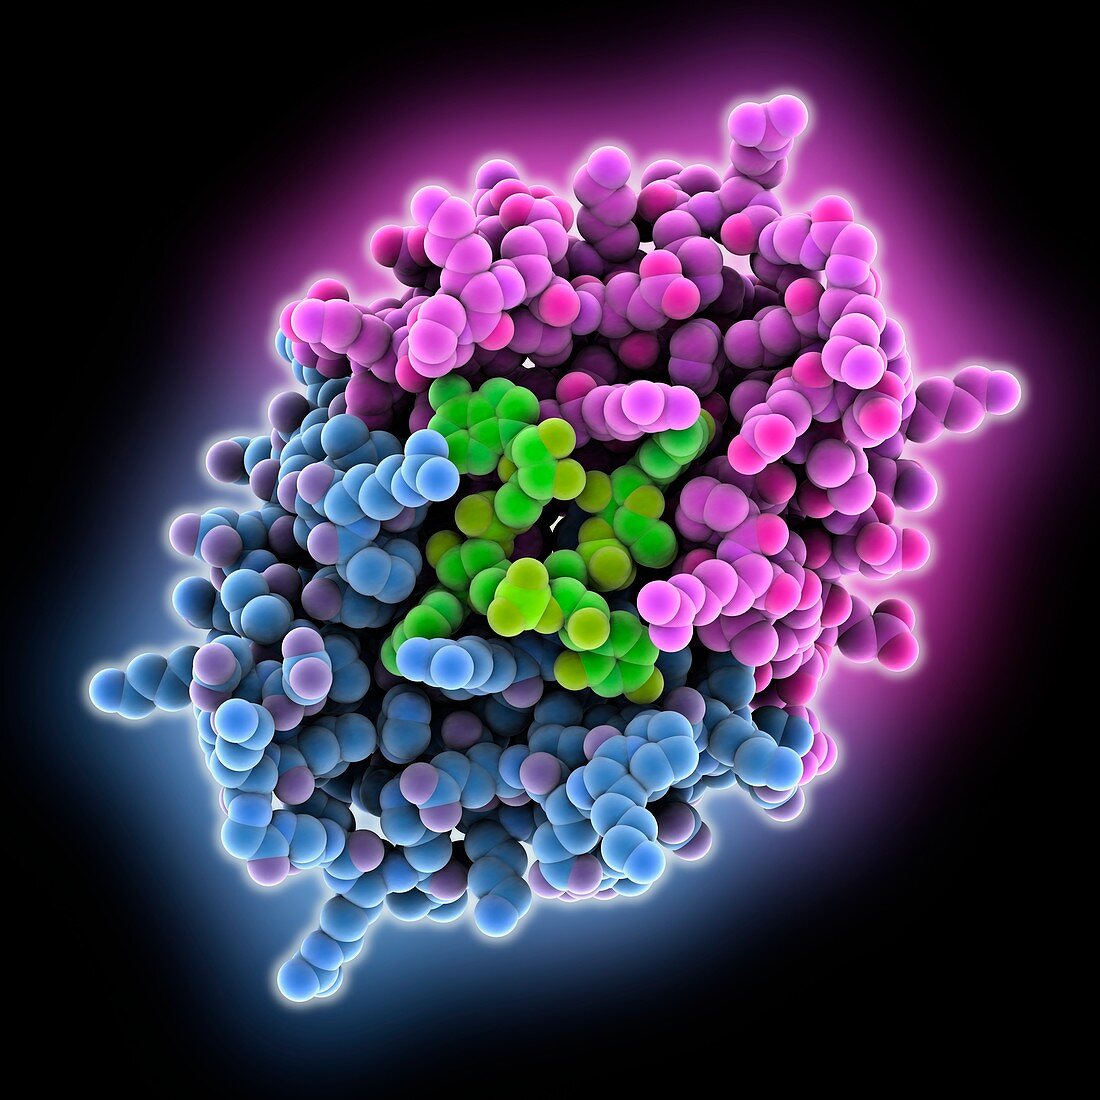 CRISPR-associated AfCsx3 complex